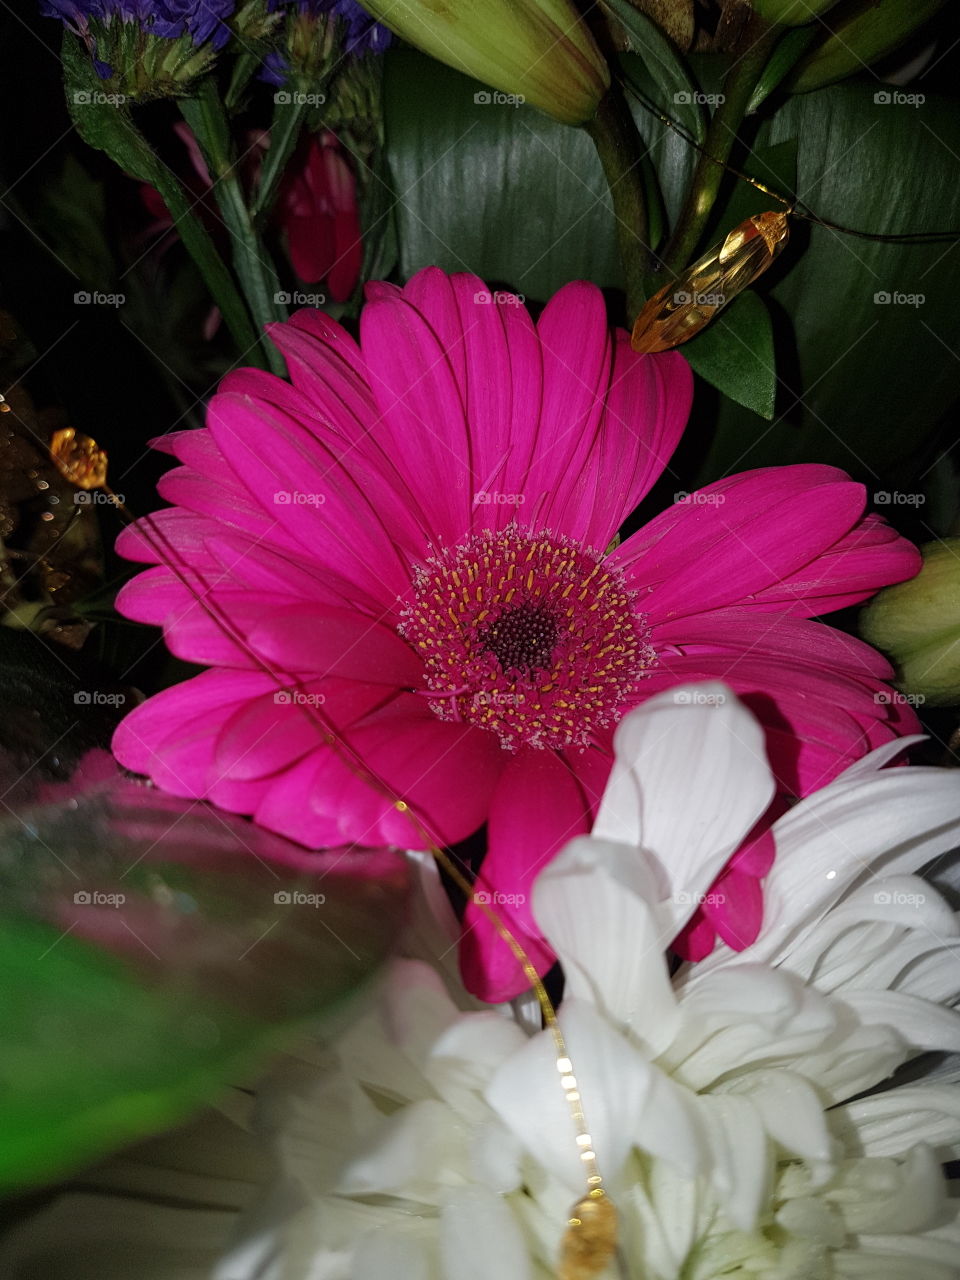 Beautiful pink flower